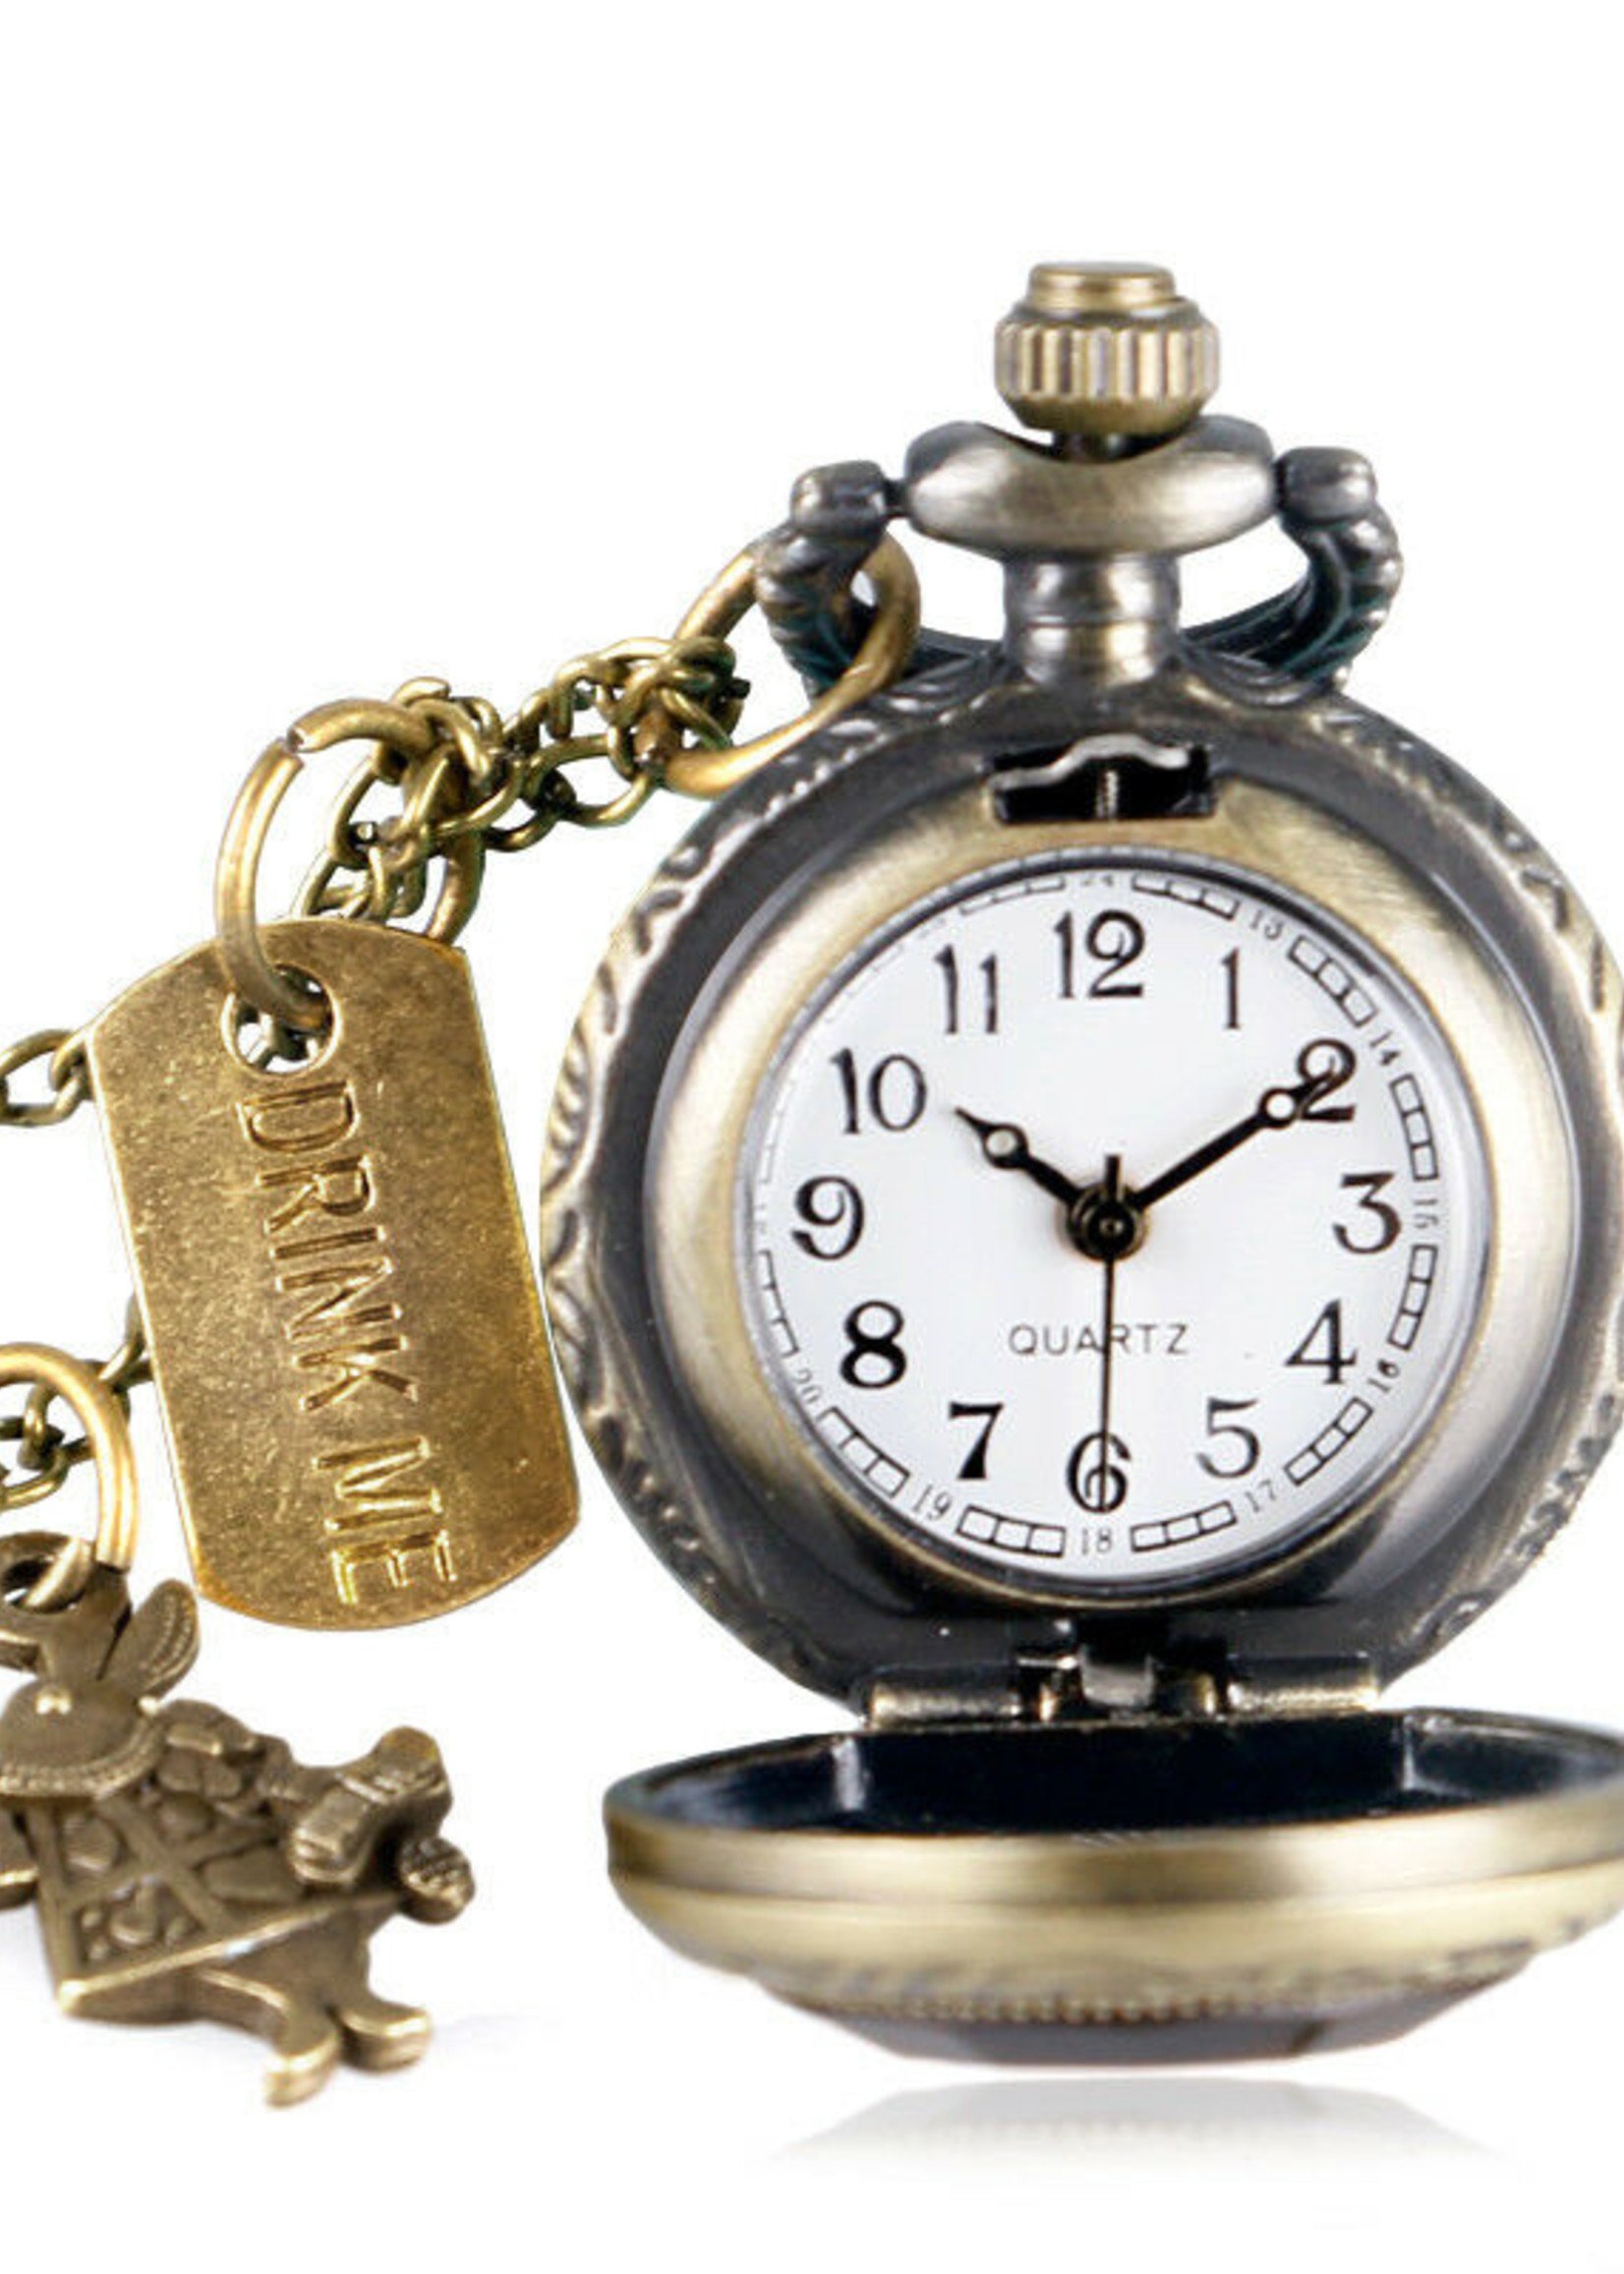 Vintage Drink Me Bottle Pocket Watch Pendant Alice in Wonderland Necklace Gift, Women's, Size: 2.5, Brown